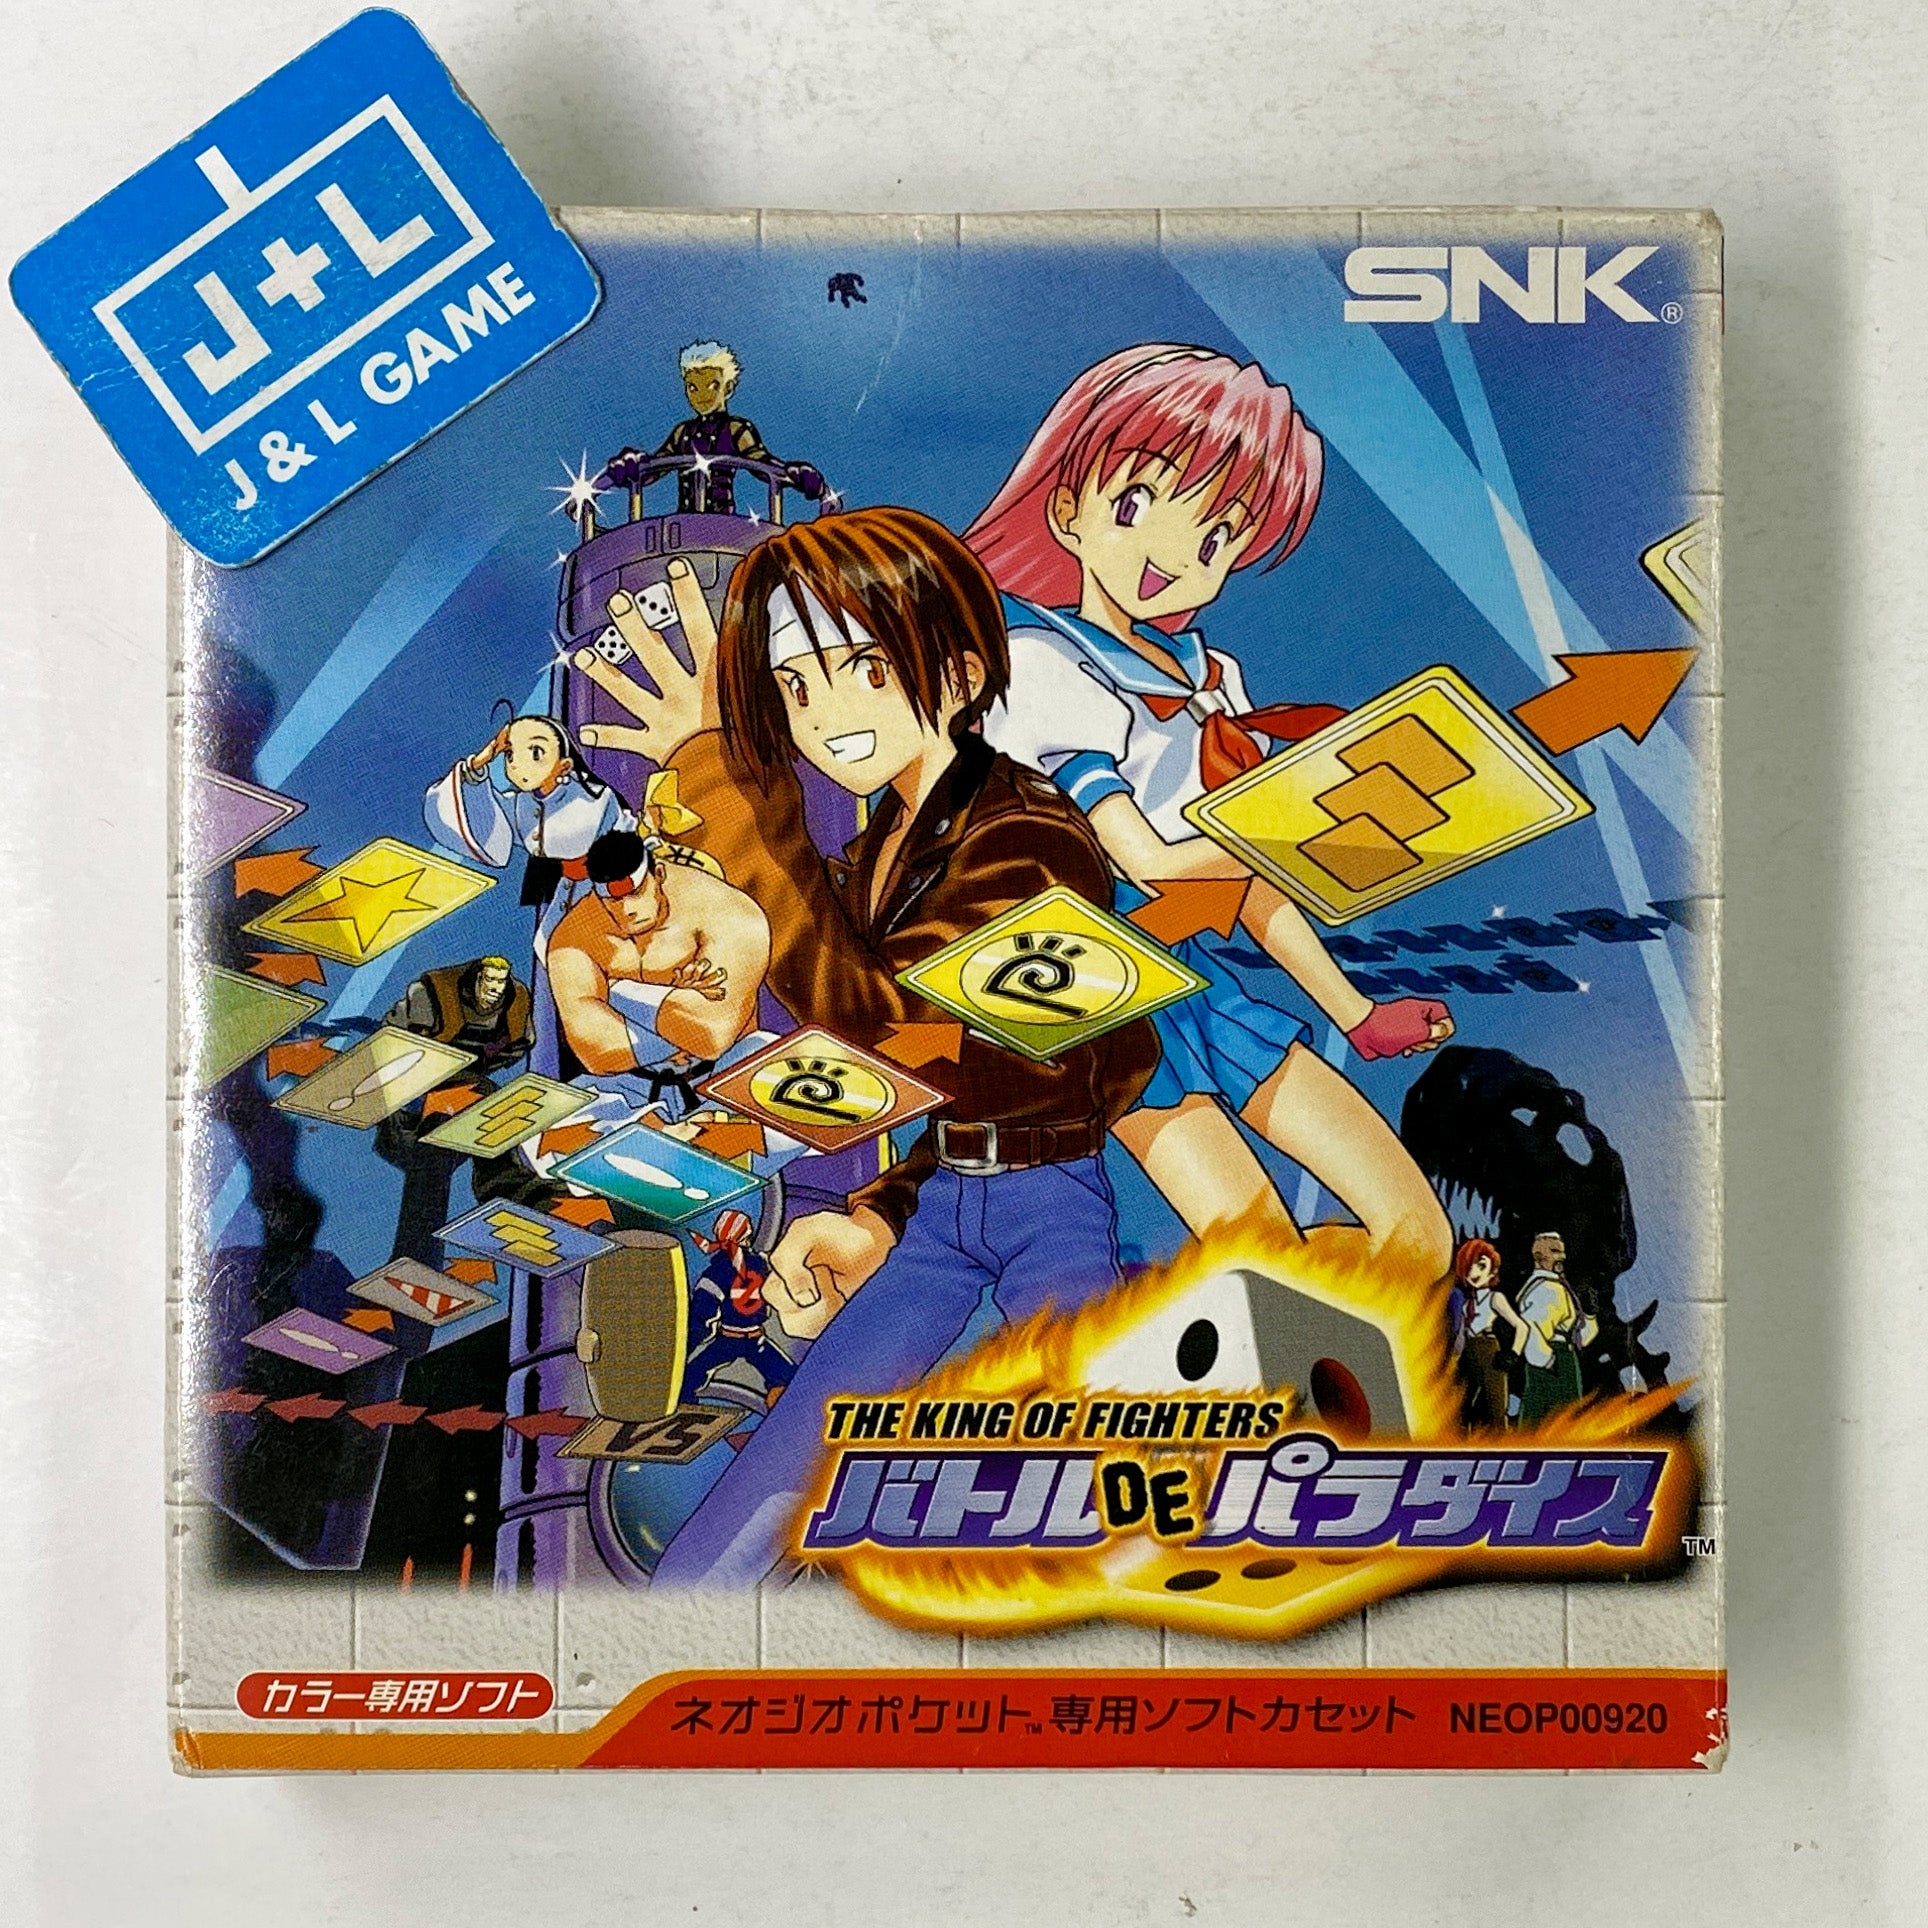 The King of Fighters: Battle de Paradise - SNK NeoGeo Pocket Color